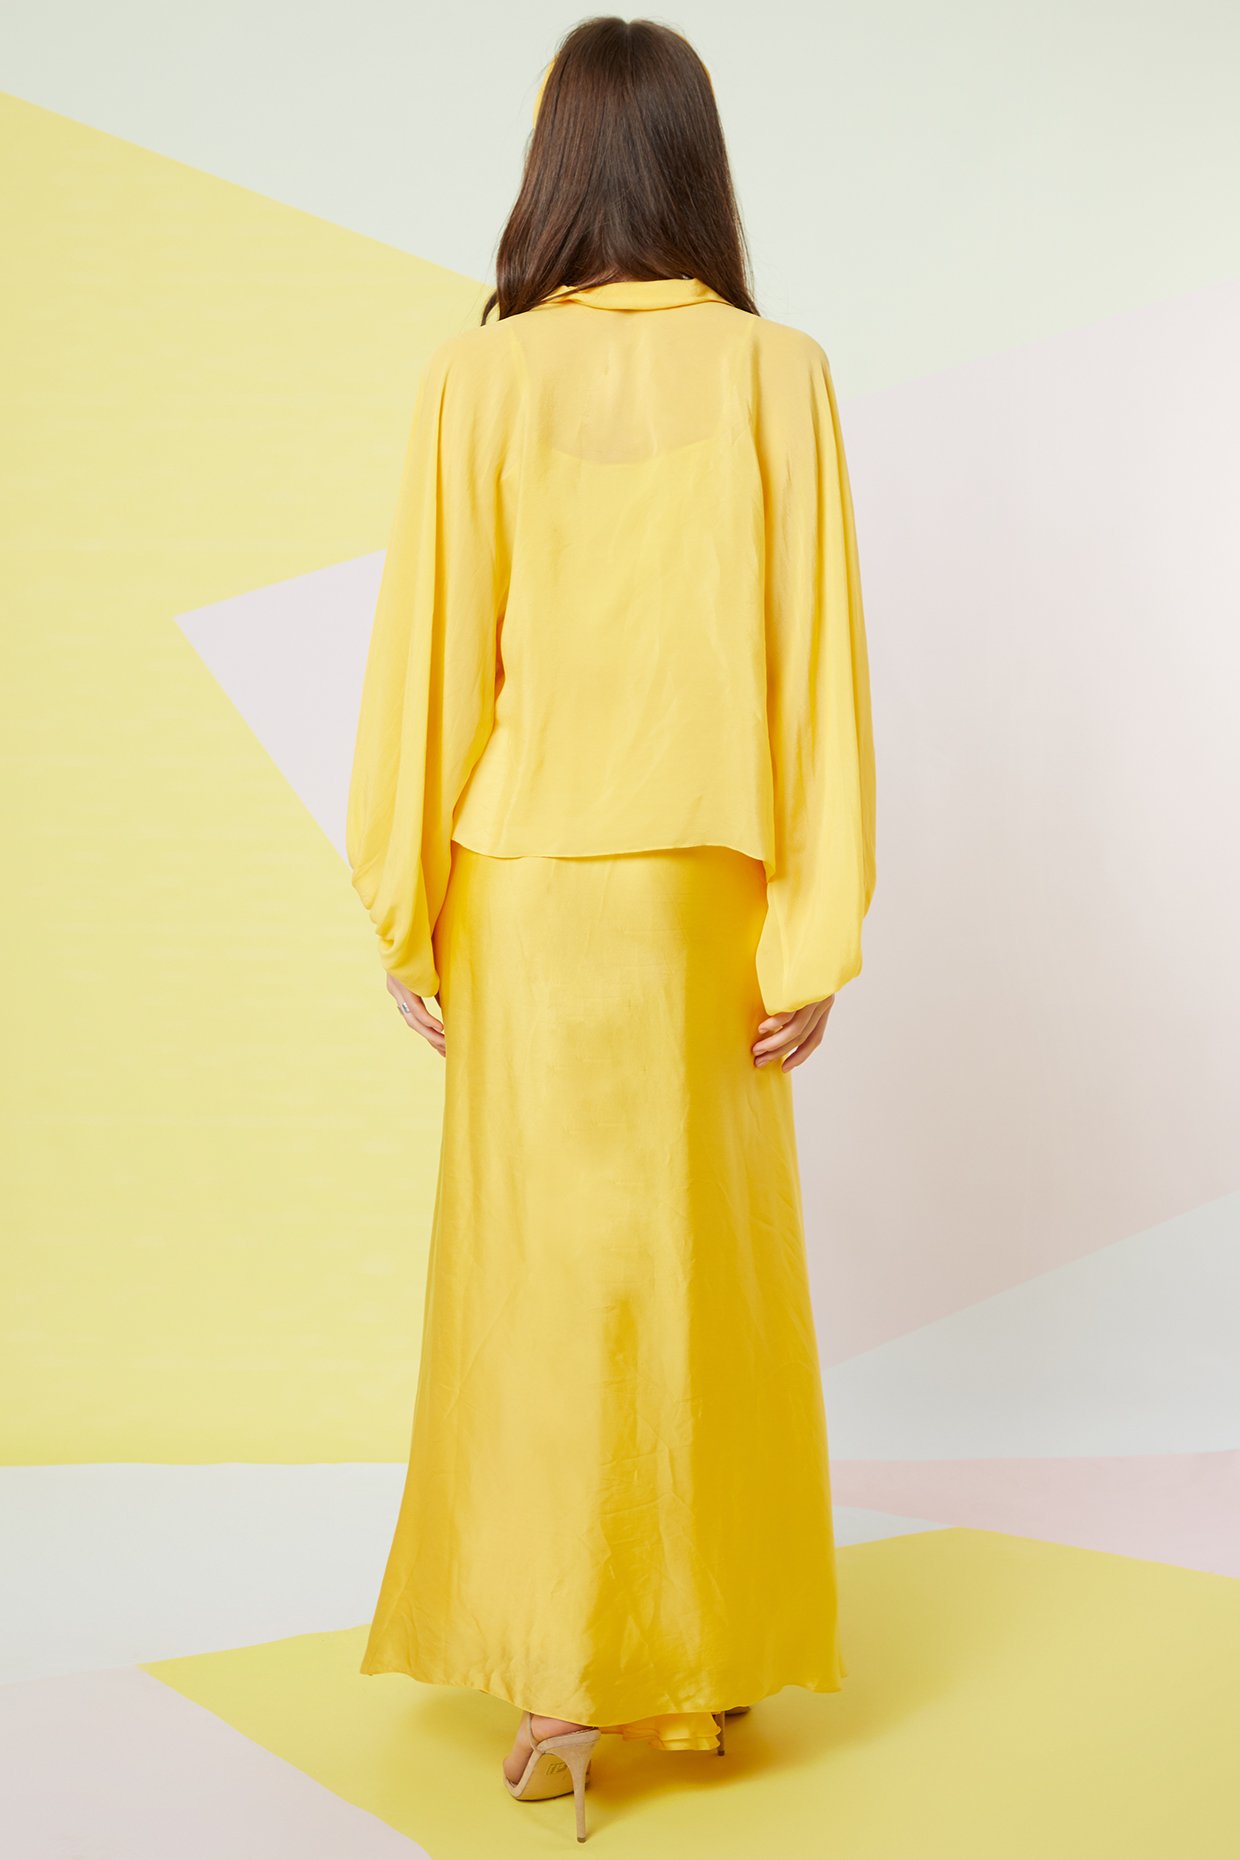 Zara  Skirts  Zara New Woman Highwaist Draped Mini Skirt Midpink   Poshmark